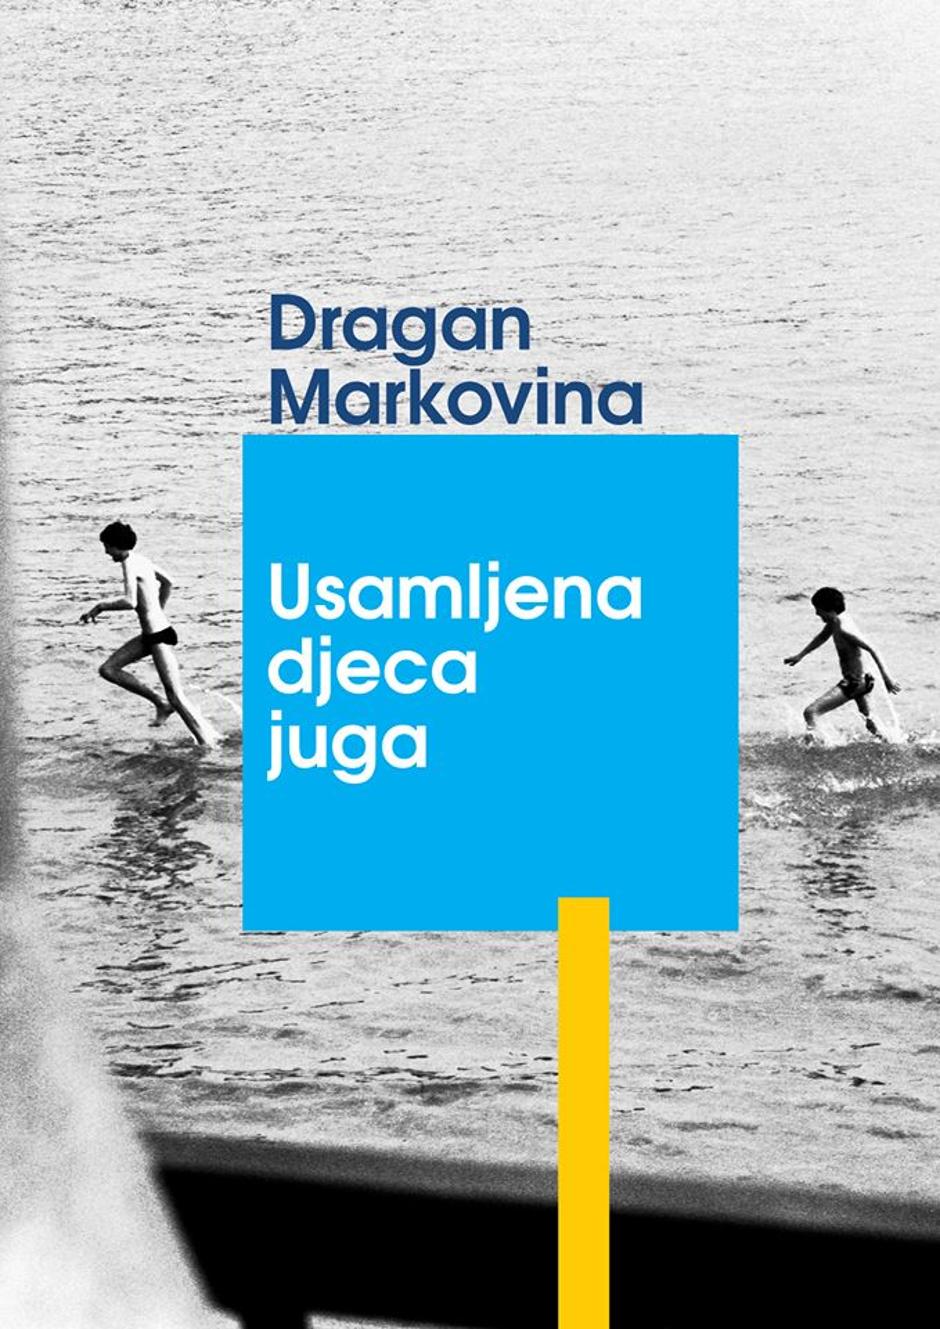 Dragan Markovina | Author: express